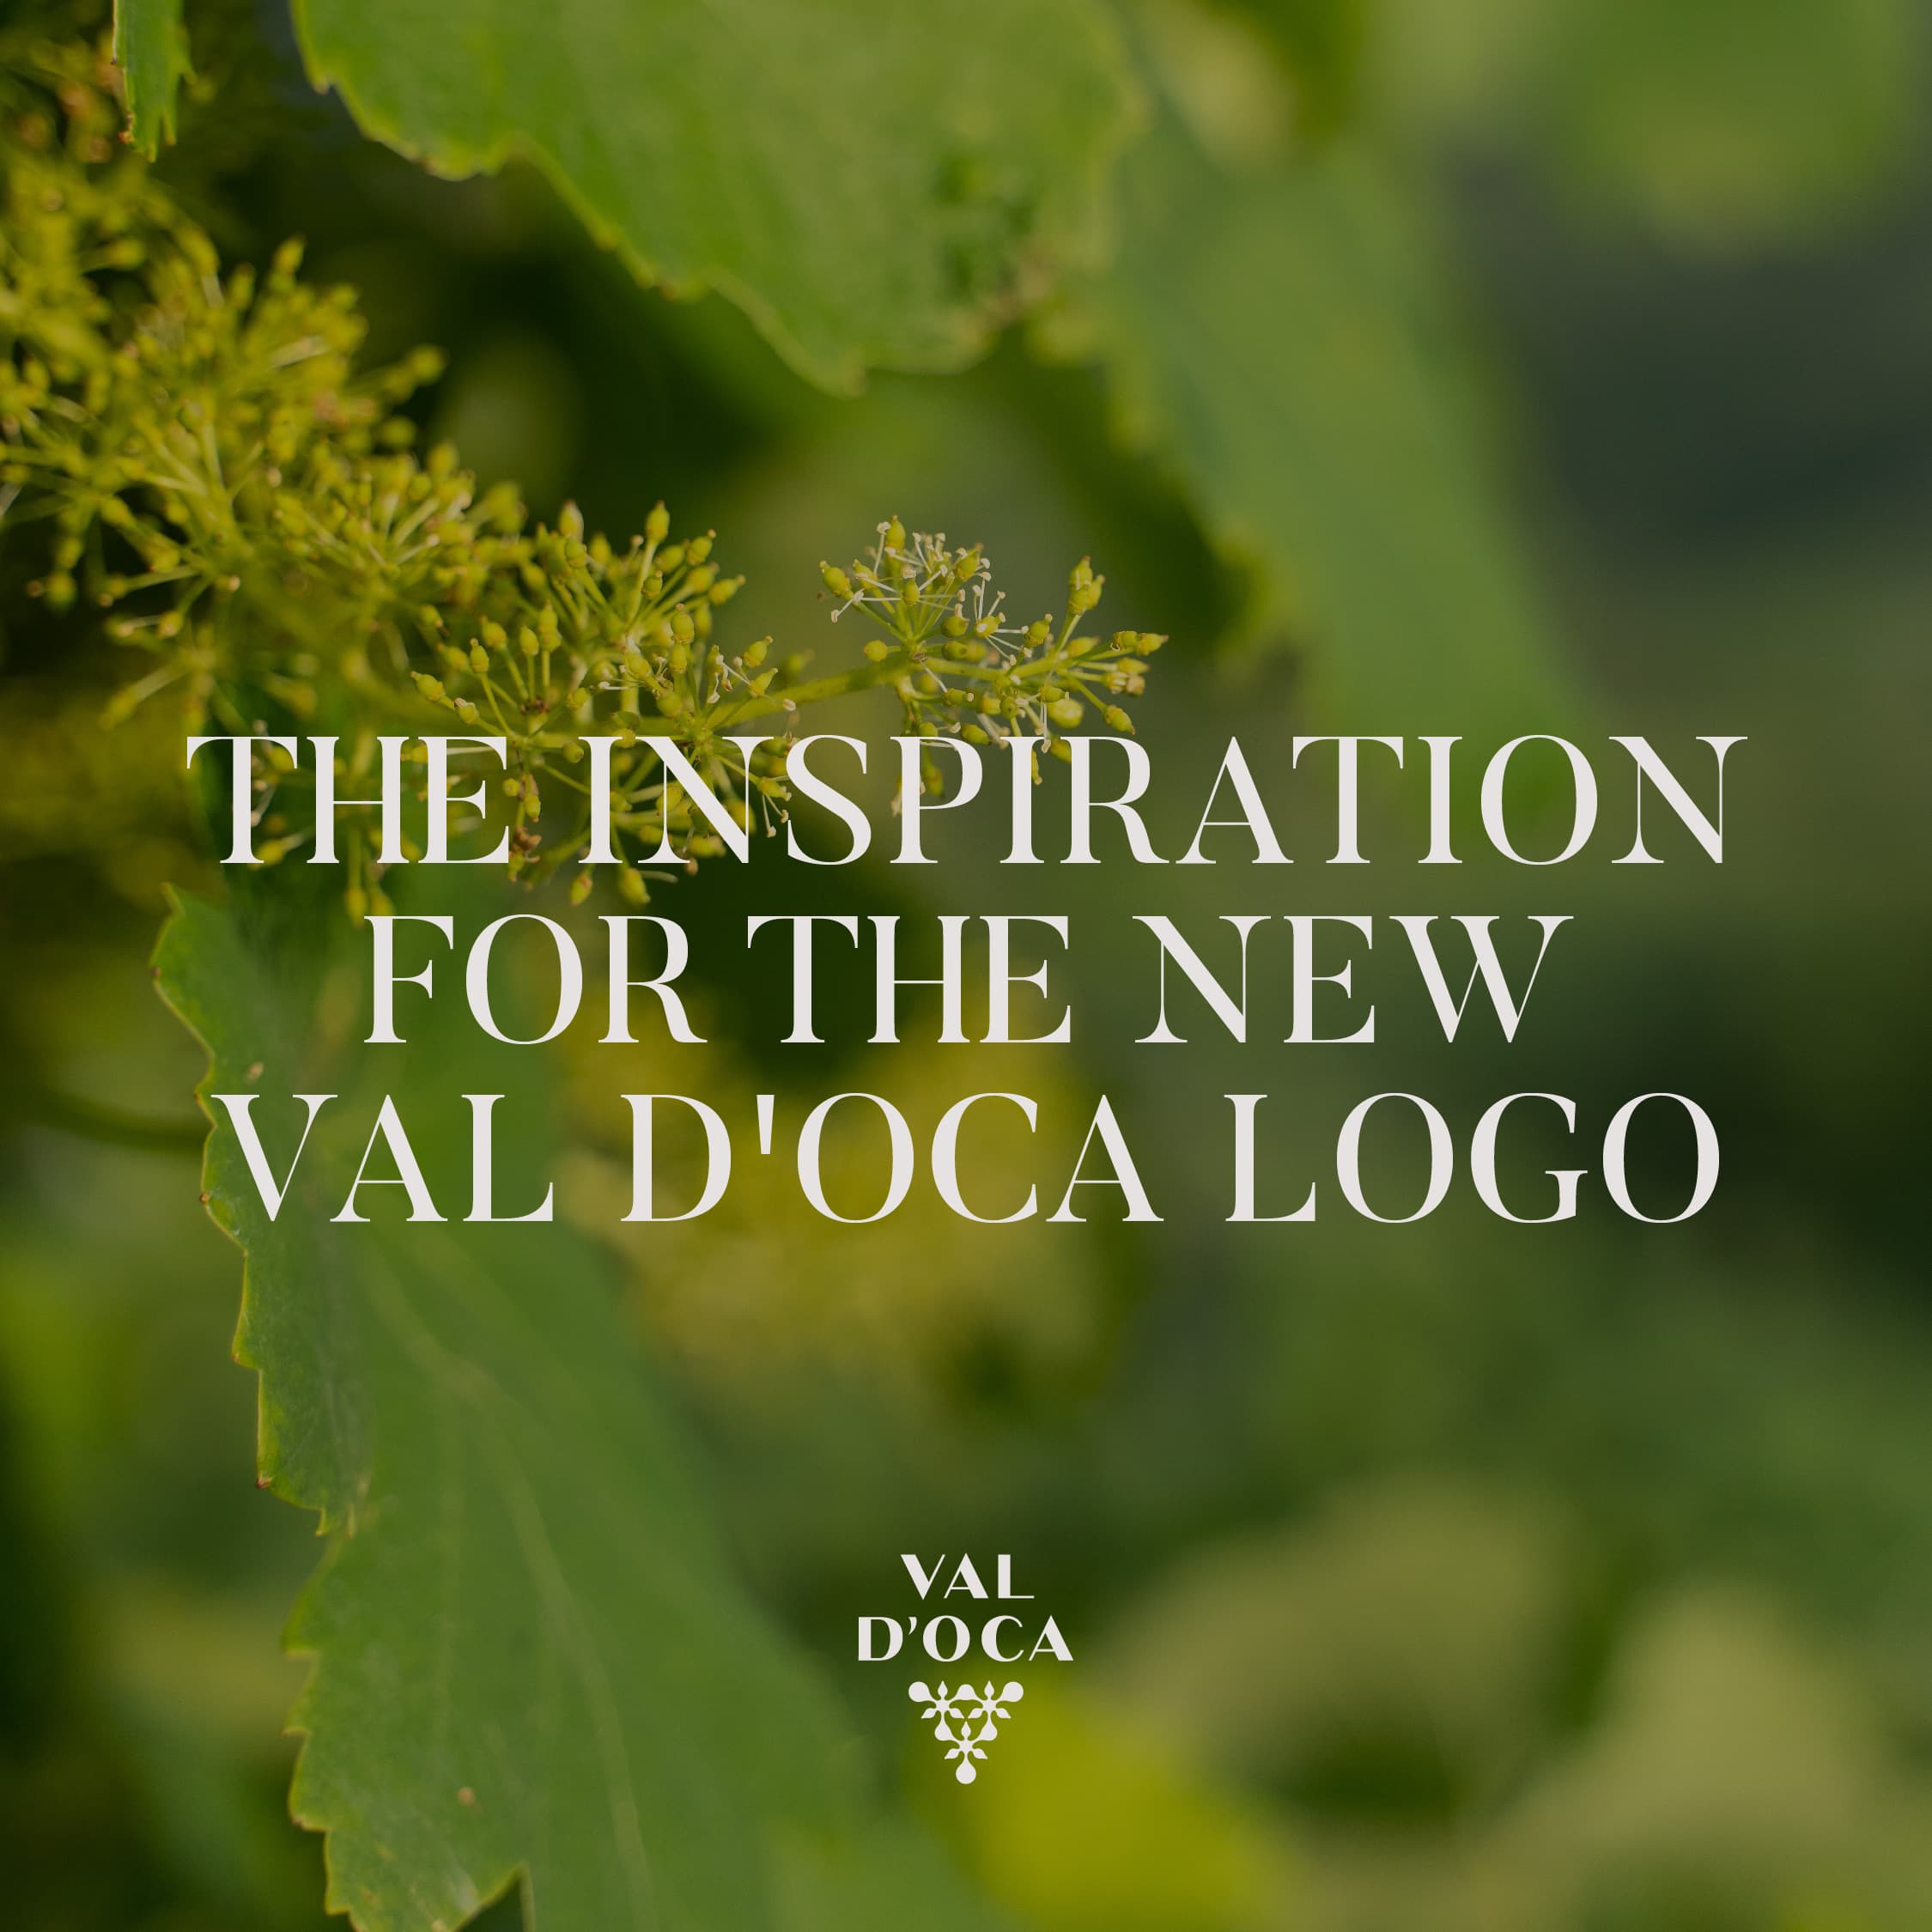 The inspiration for the new Val d'Oca logo